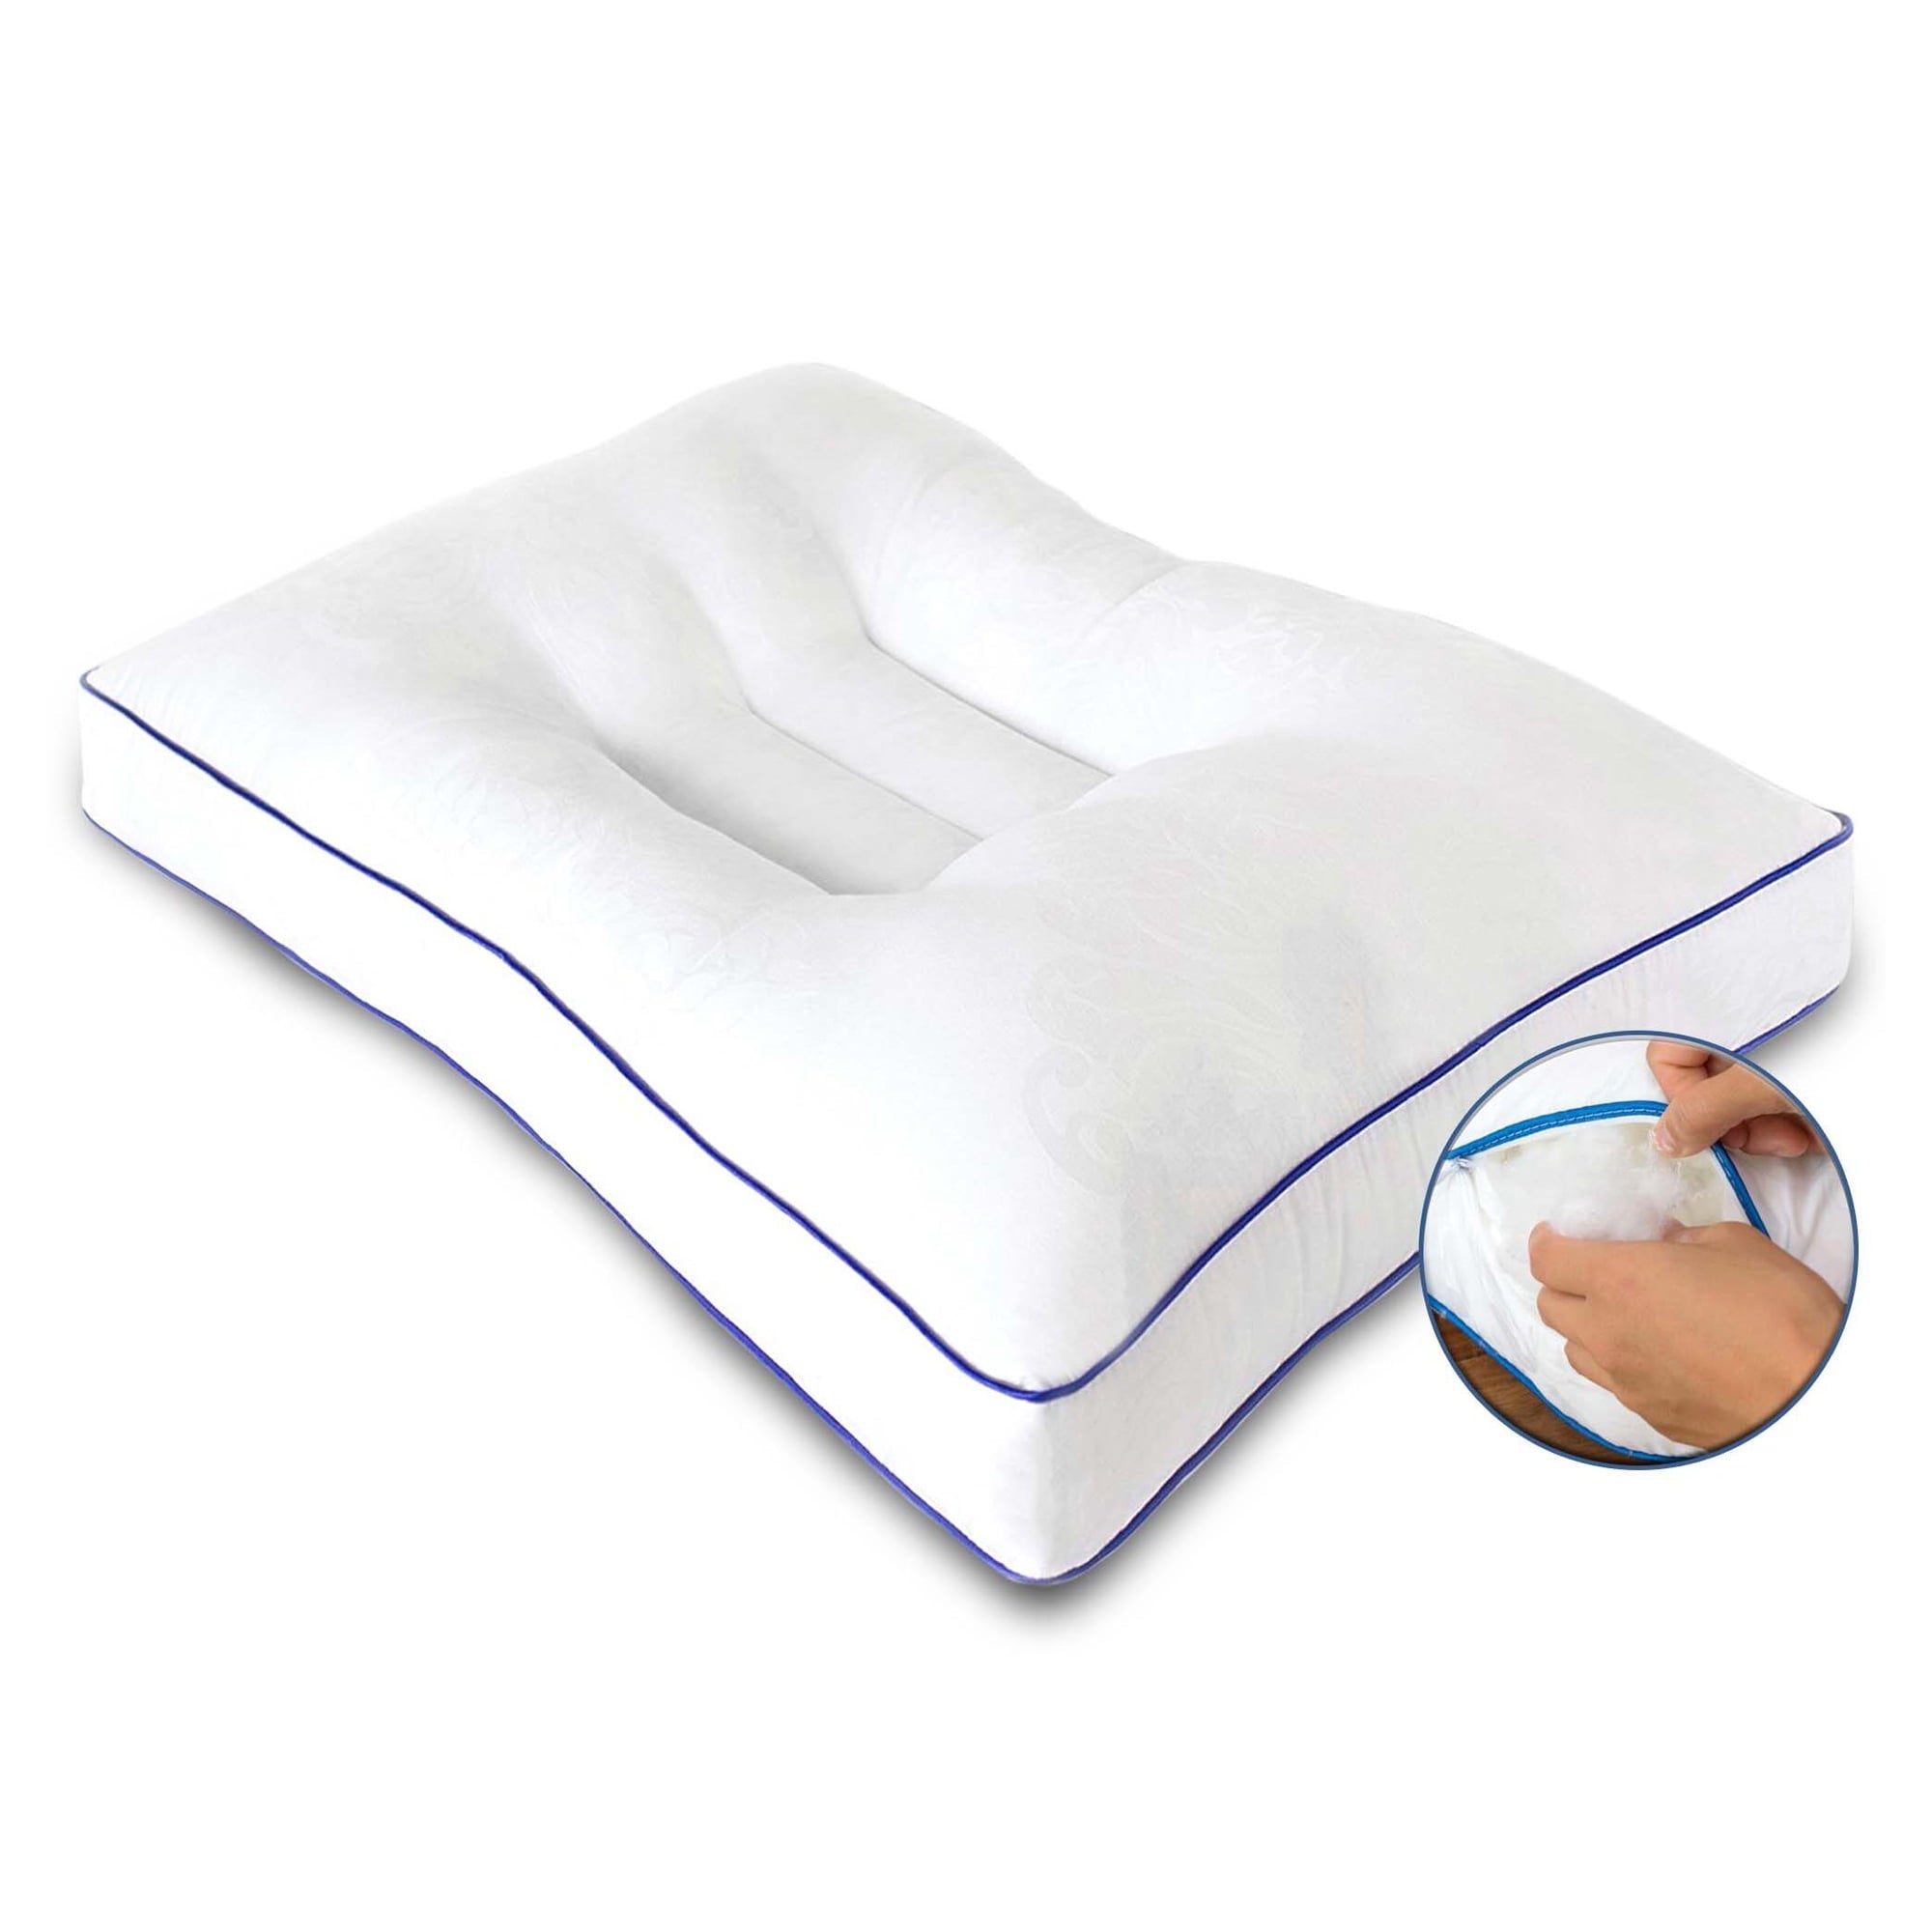 Nature's Guest Adjustable Cervical Pillow, Standard Size, Medium Support